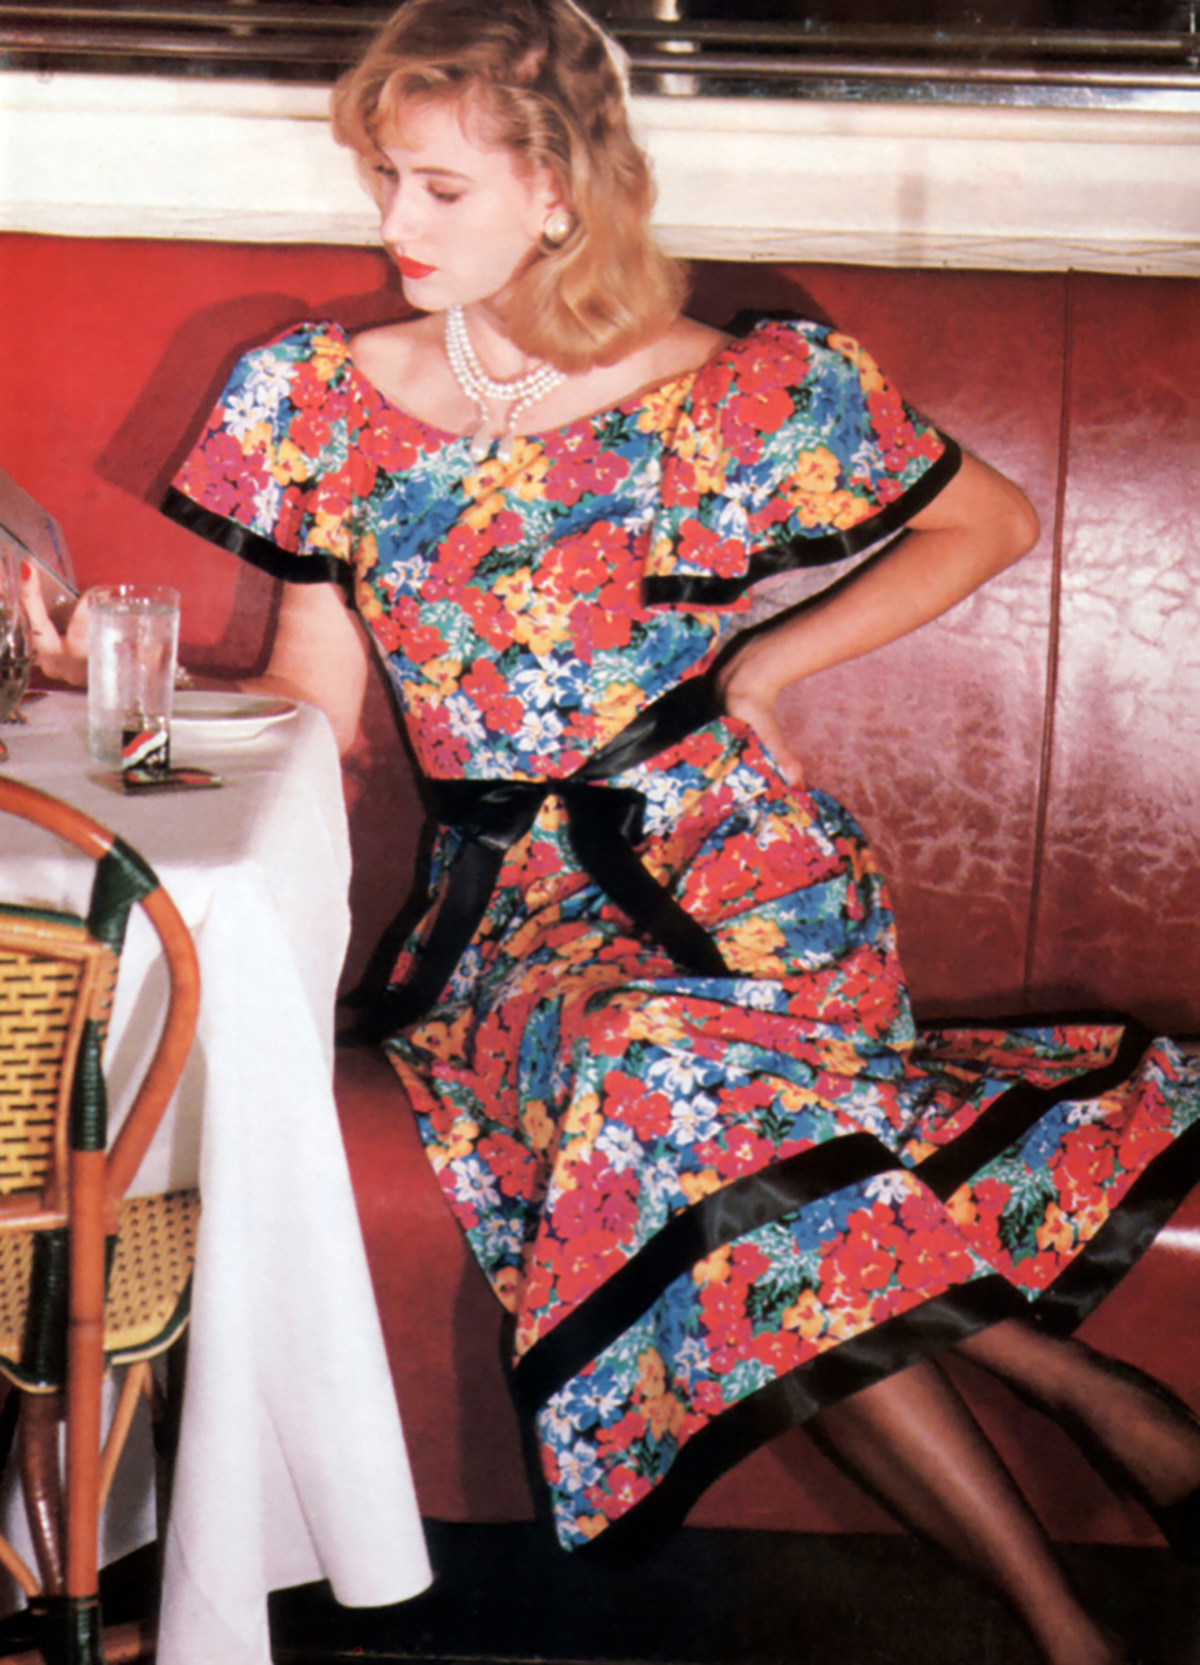 Ungaro day dress, 1980s